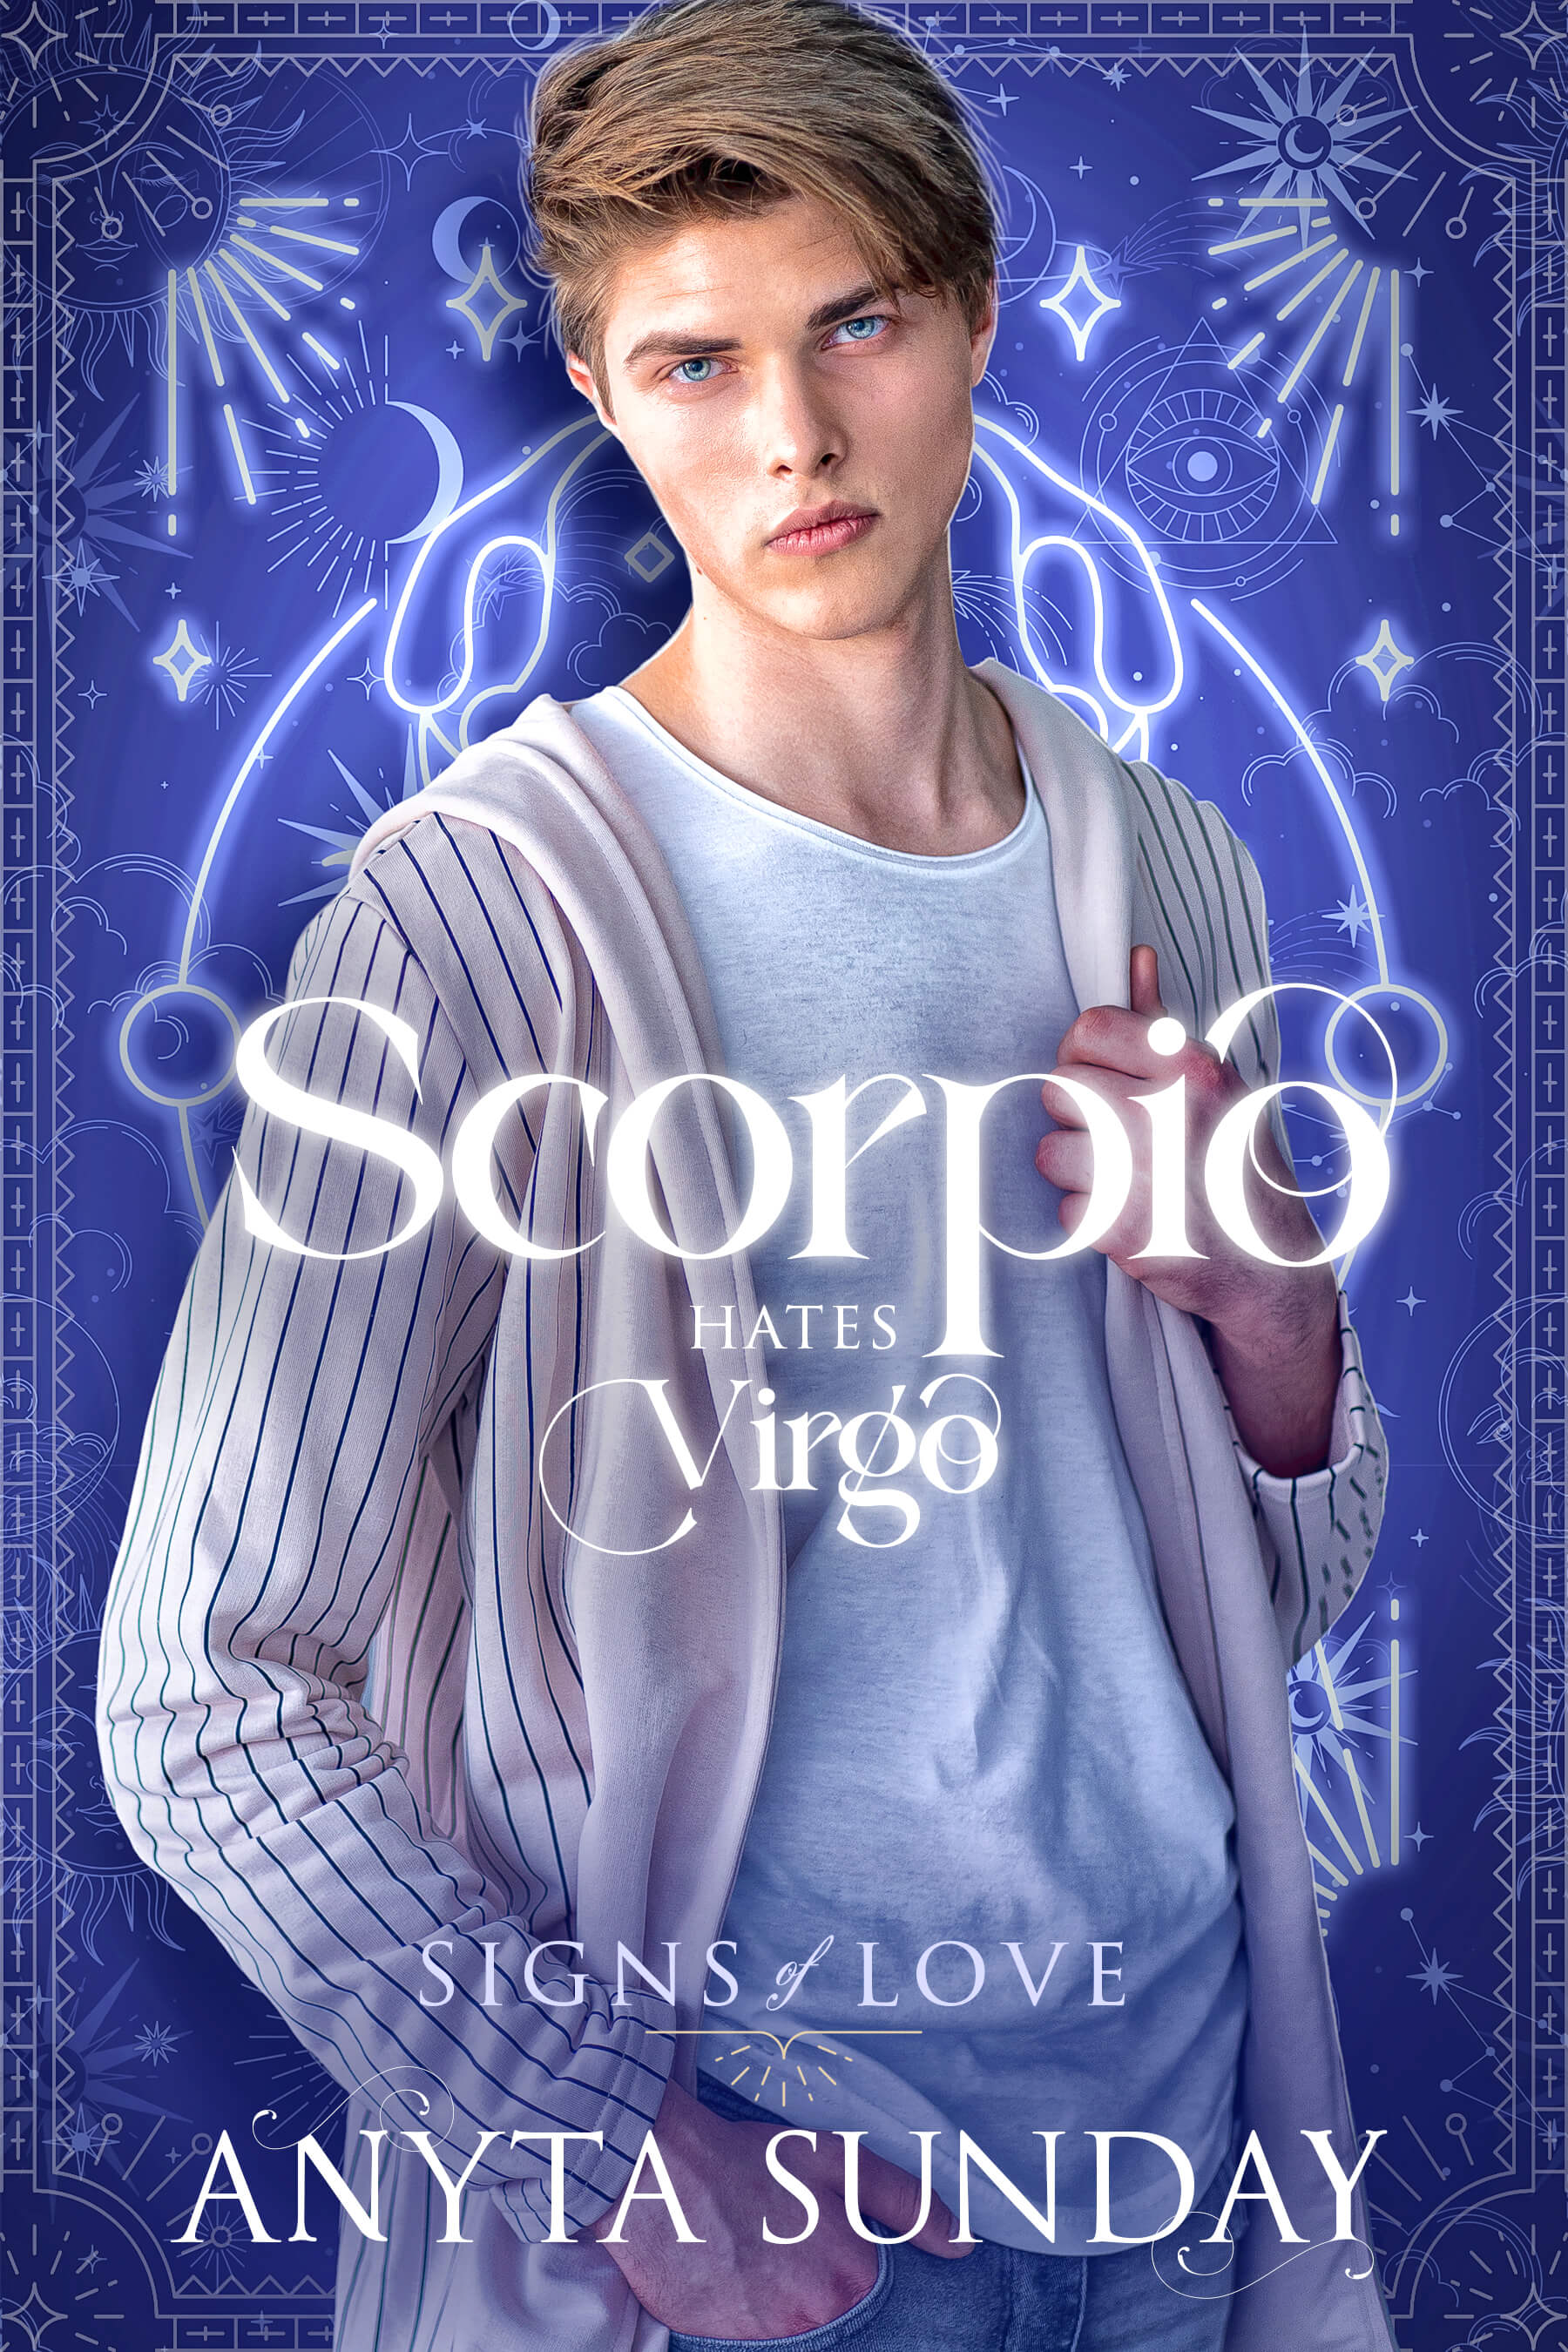 Scorpio Hates Virgo Cover Image - Gay Romance by Anyta Sunday